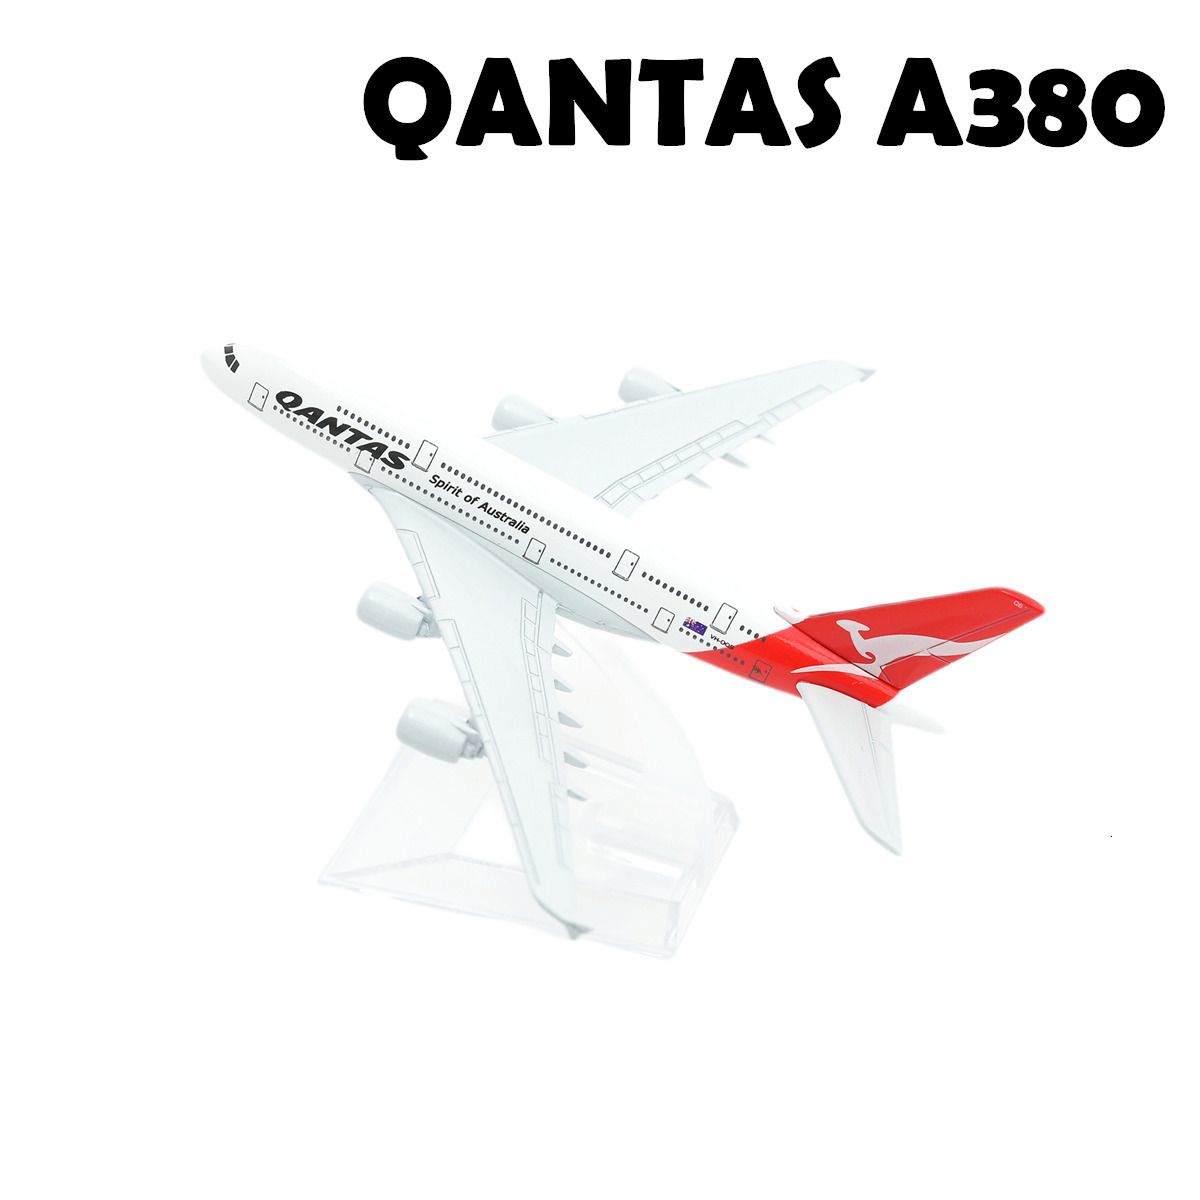 6.Qantas A380